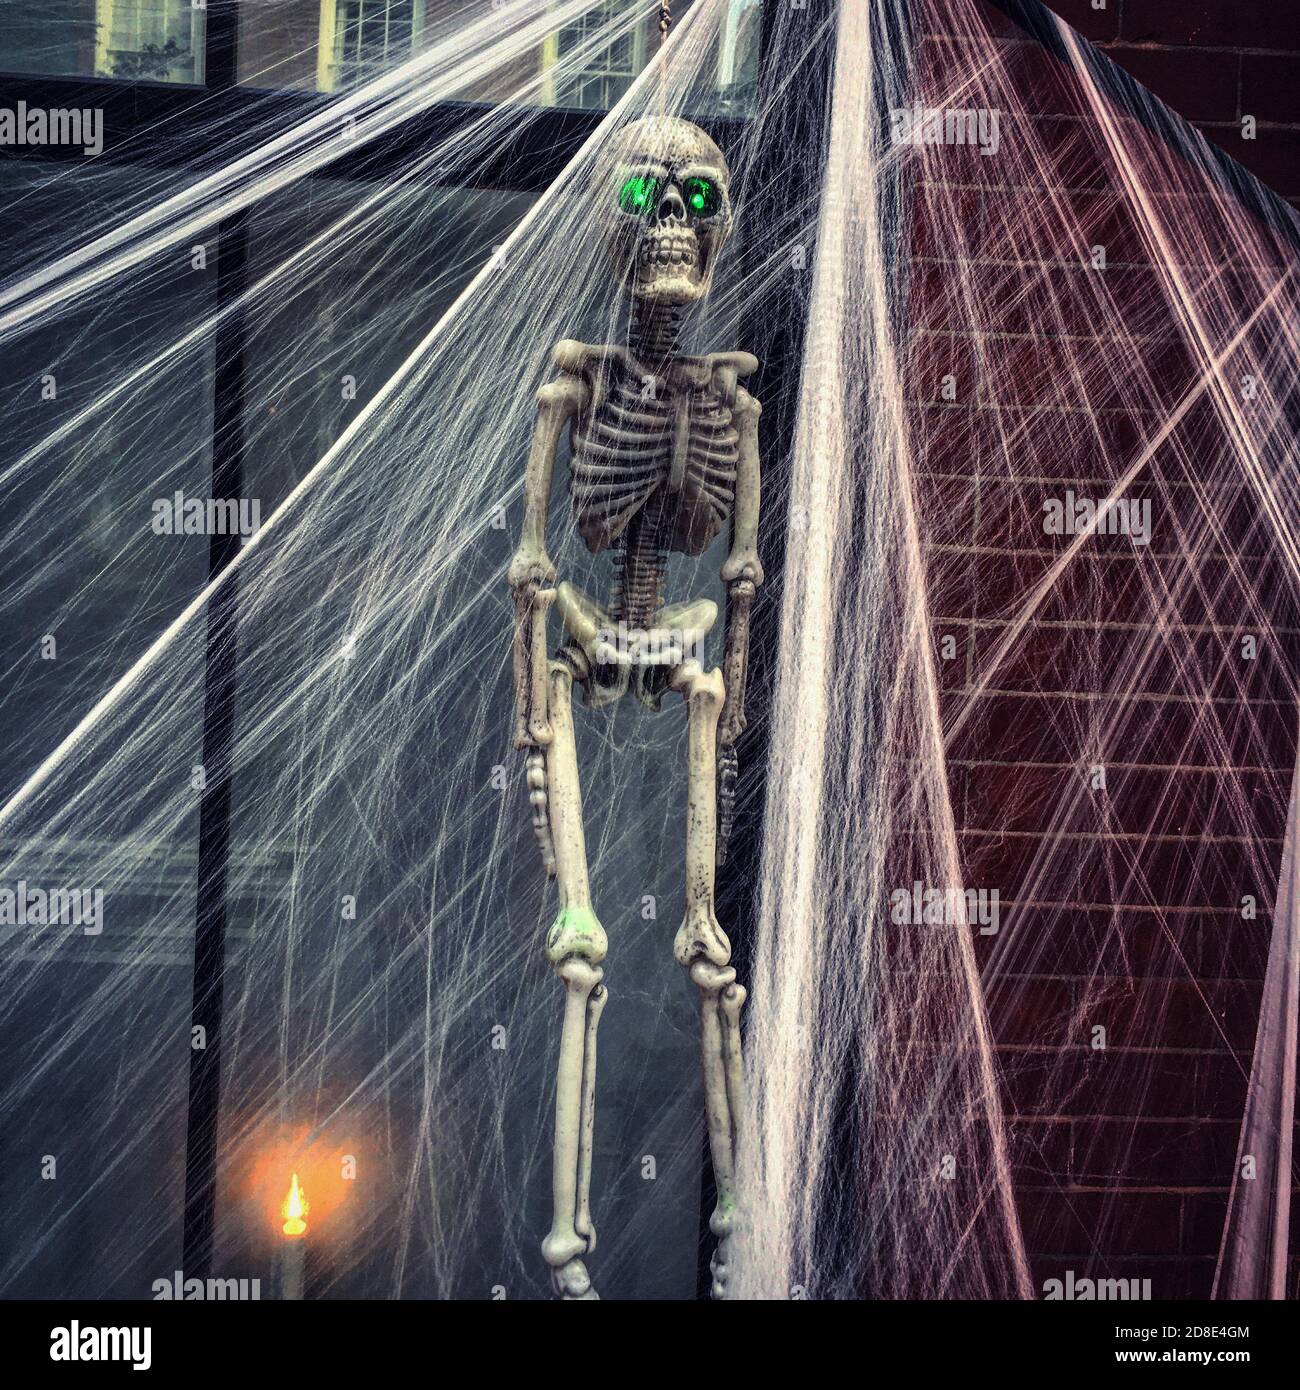 Skeleton and Cob Webs Halloween Decorations Stock Photo